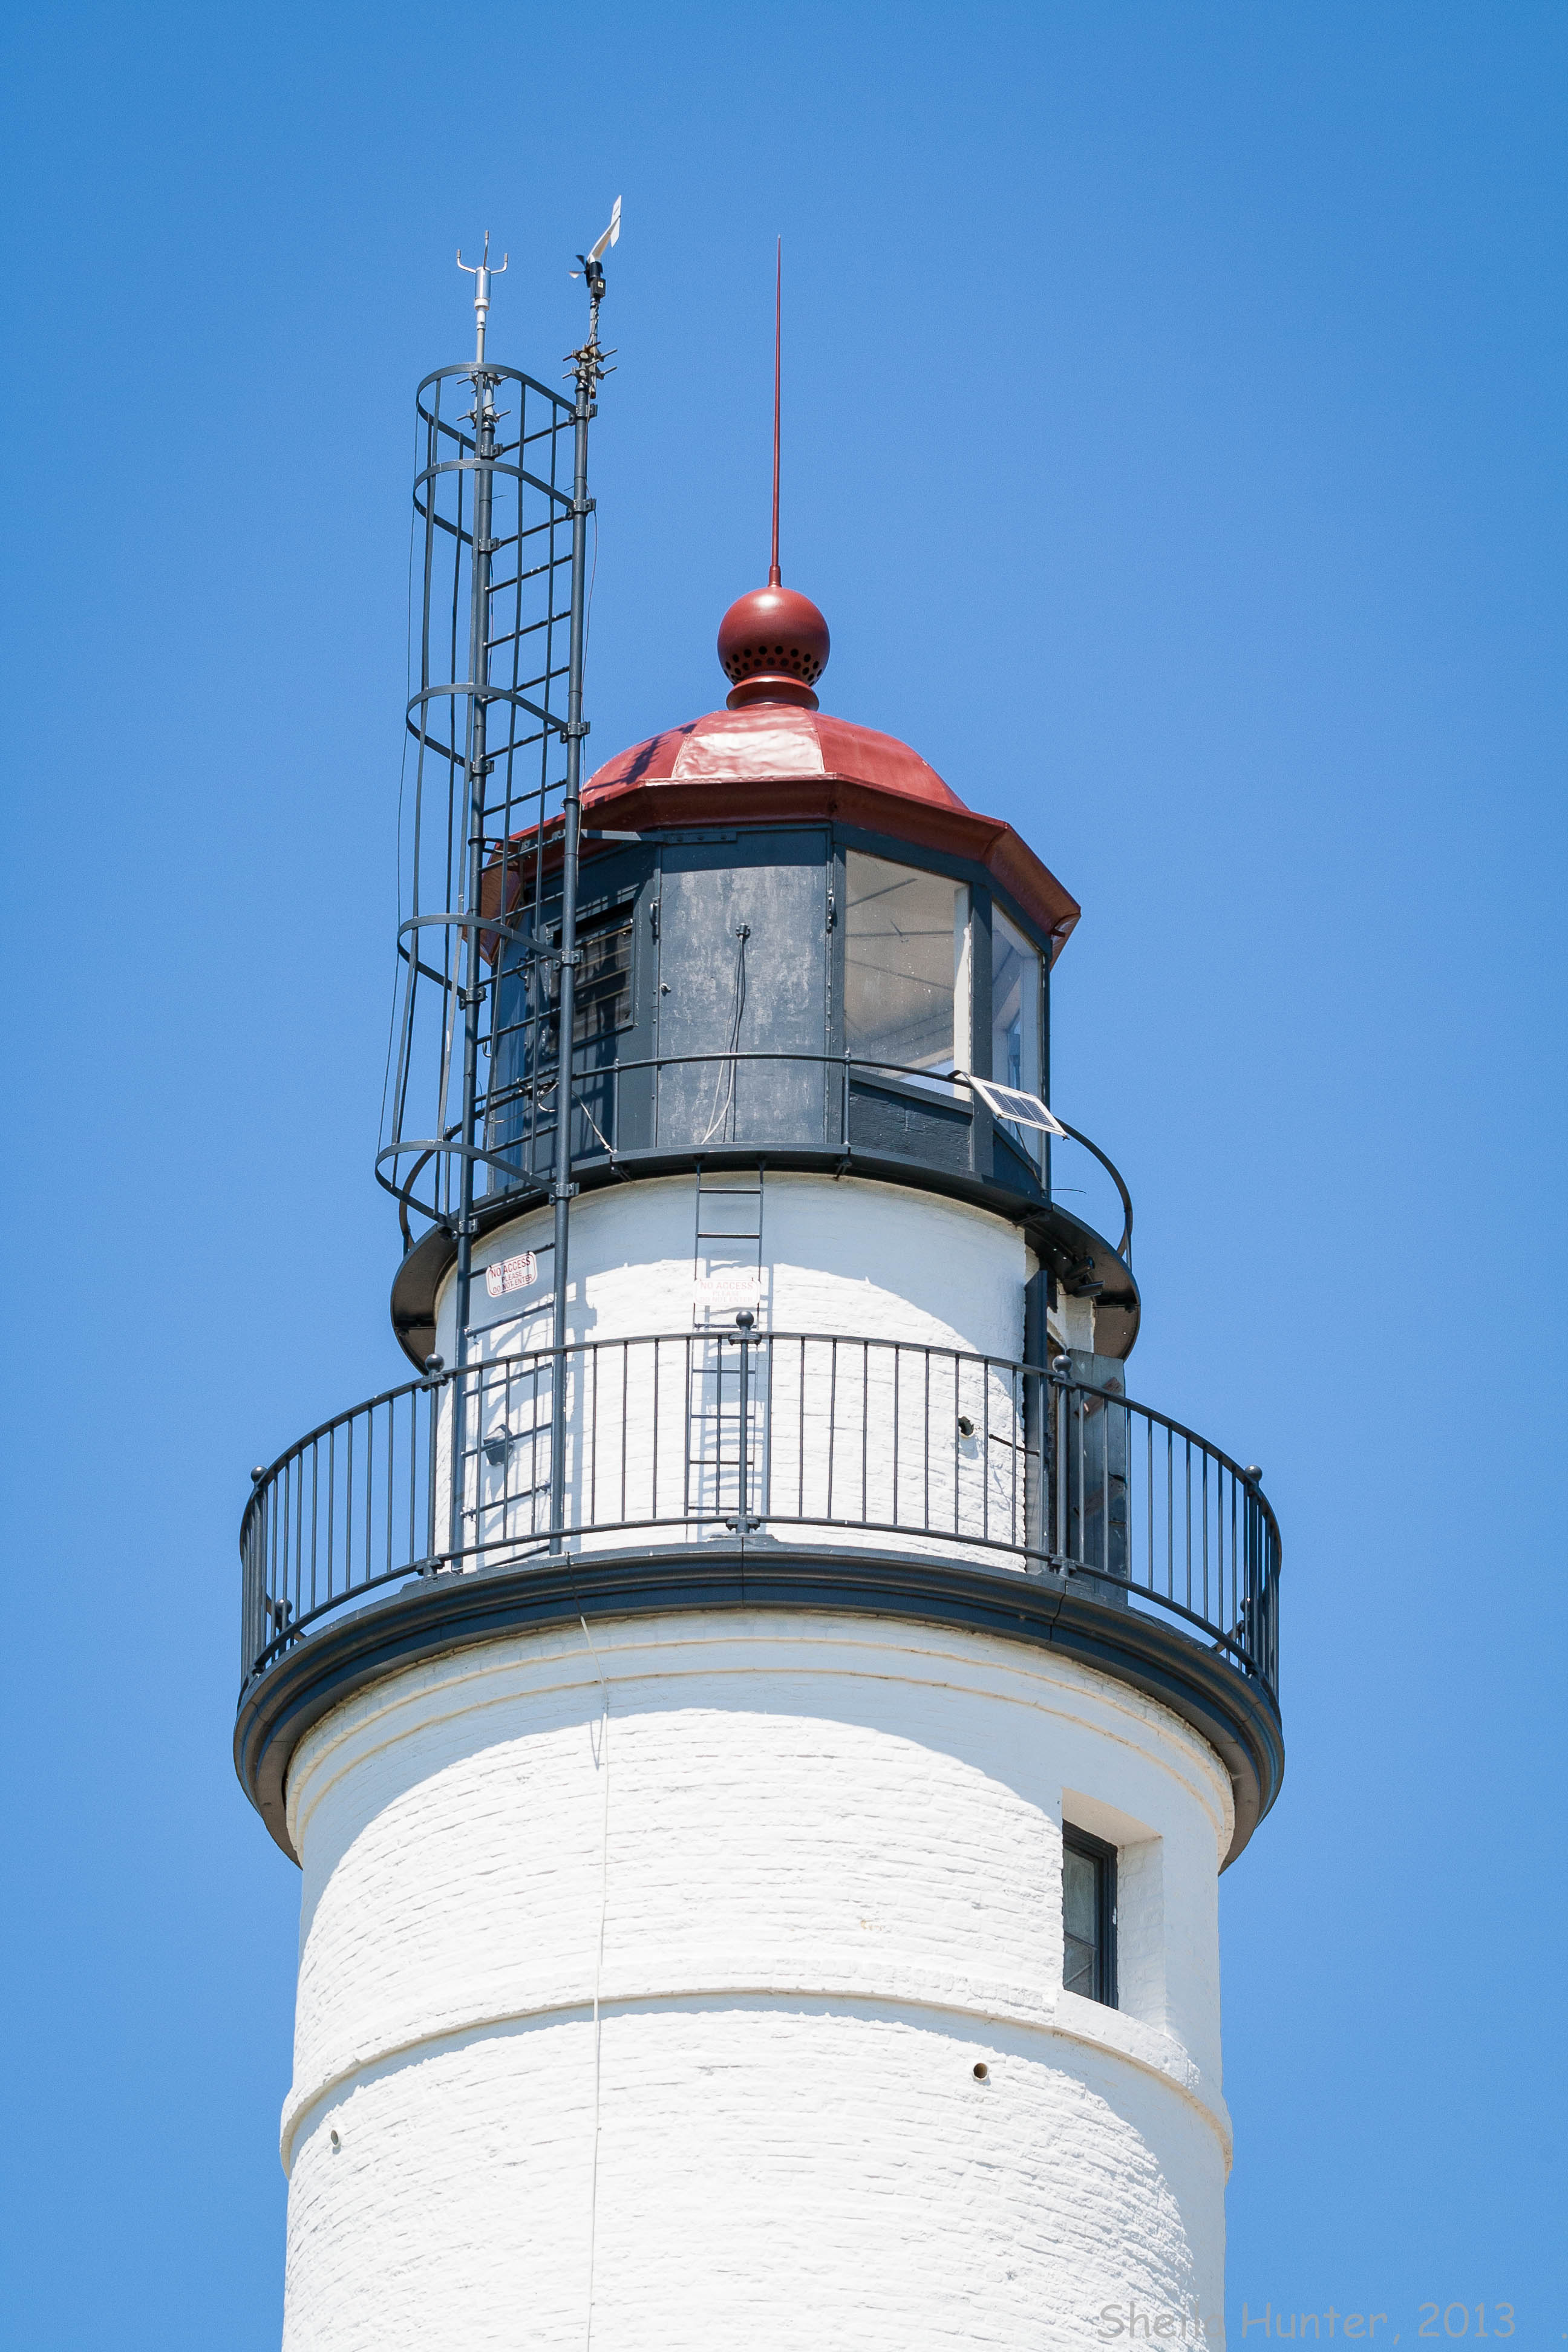 Port Huron Lighthouse